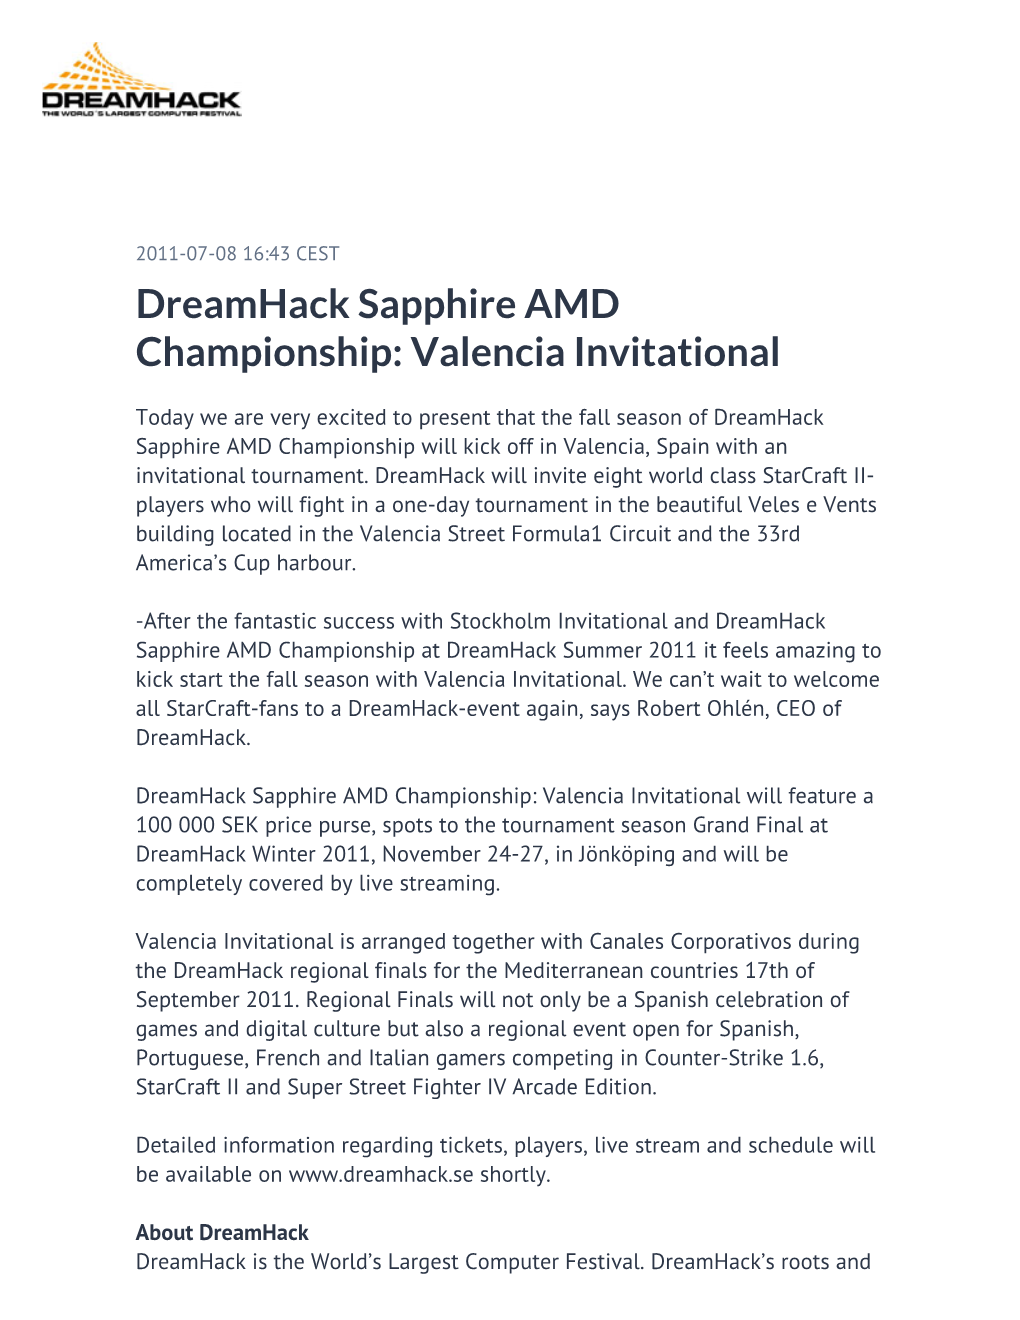 Dreamhack Sapphire AMD Championship: Valencia Invitational